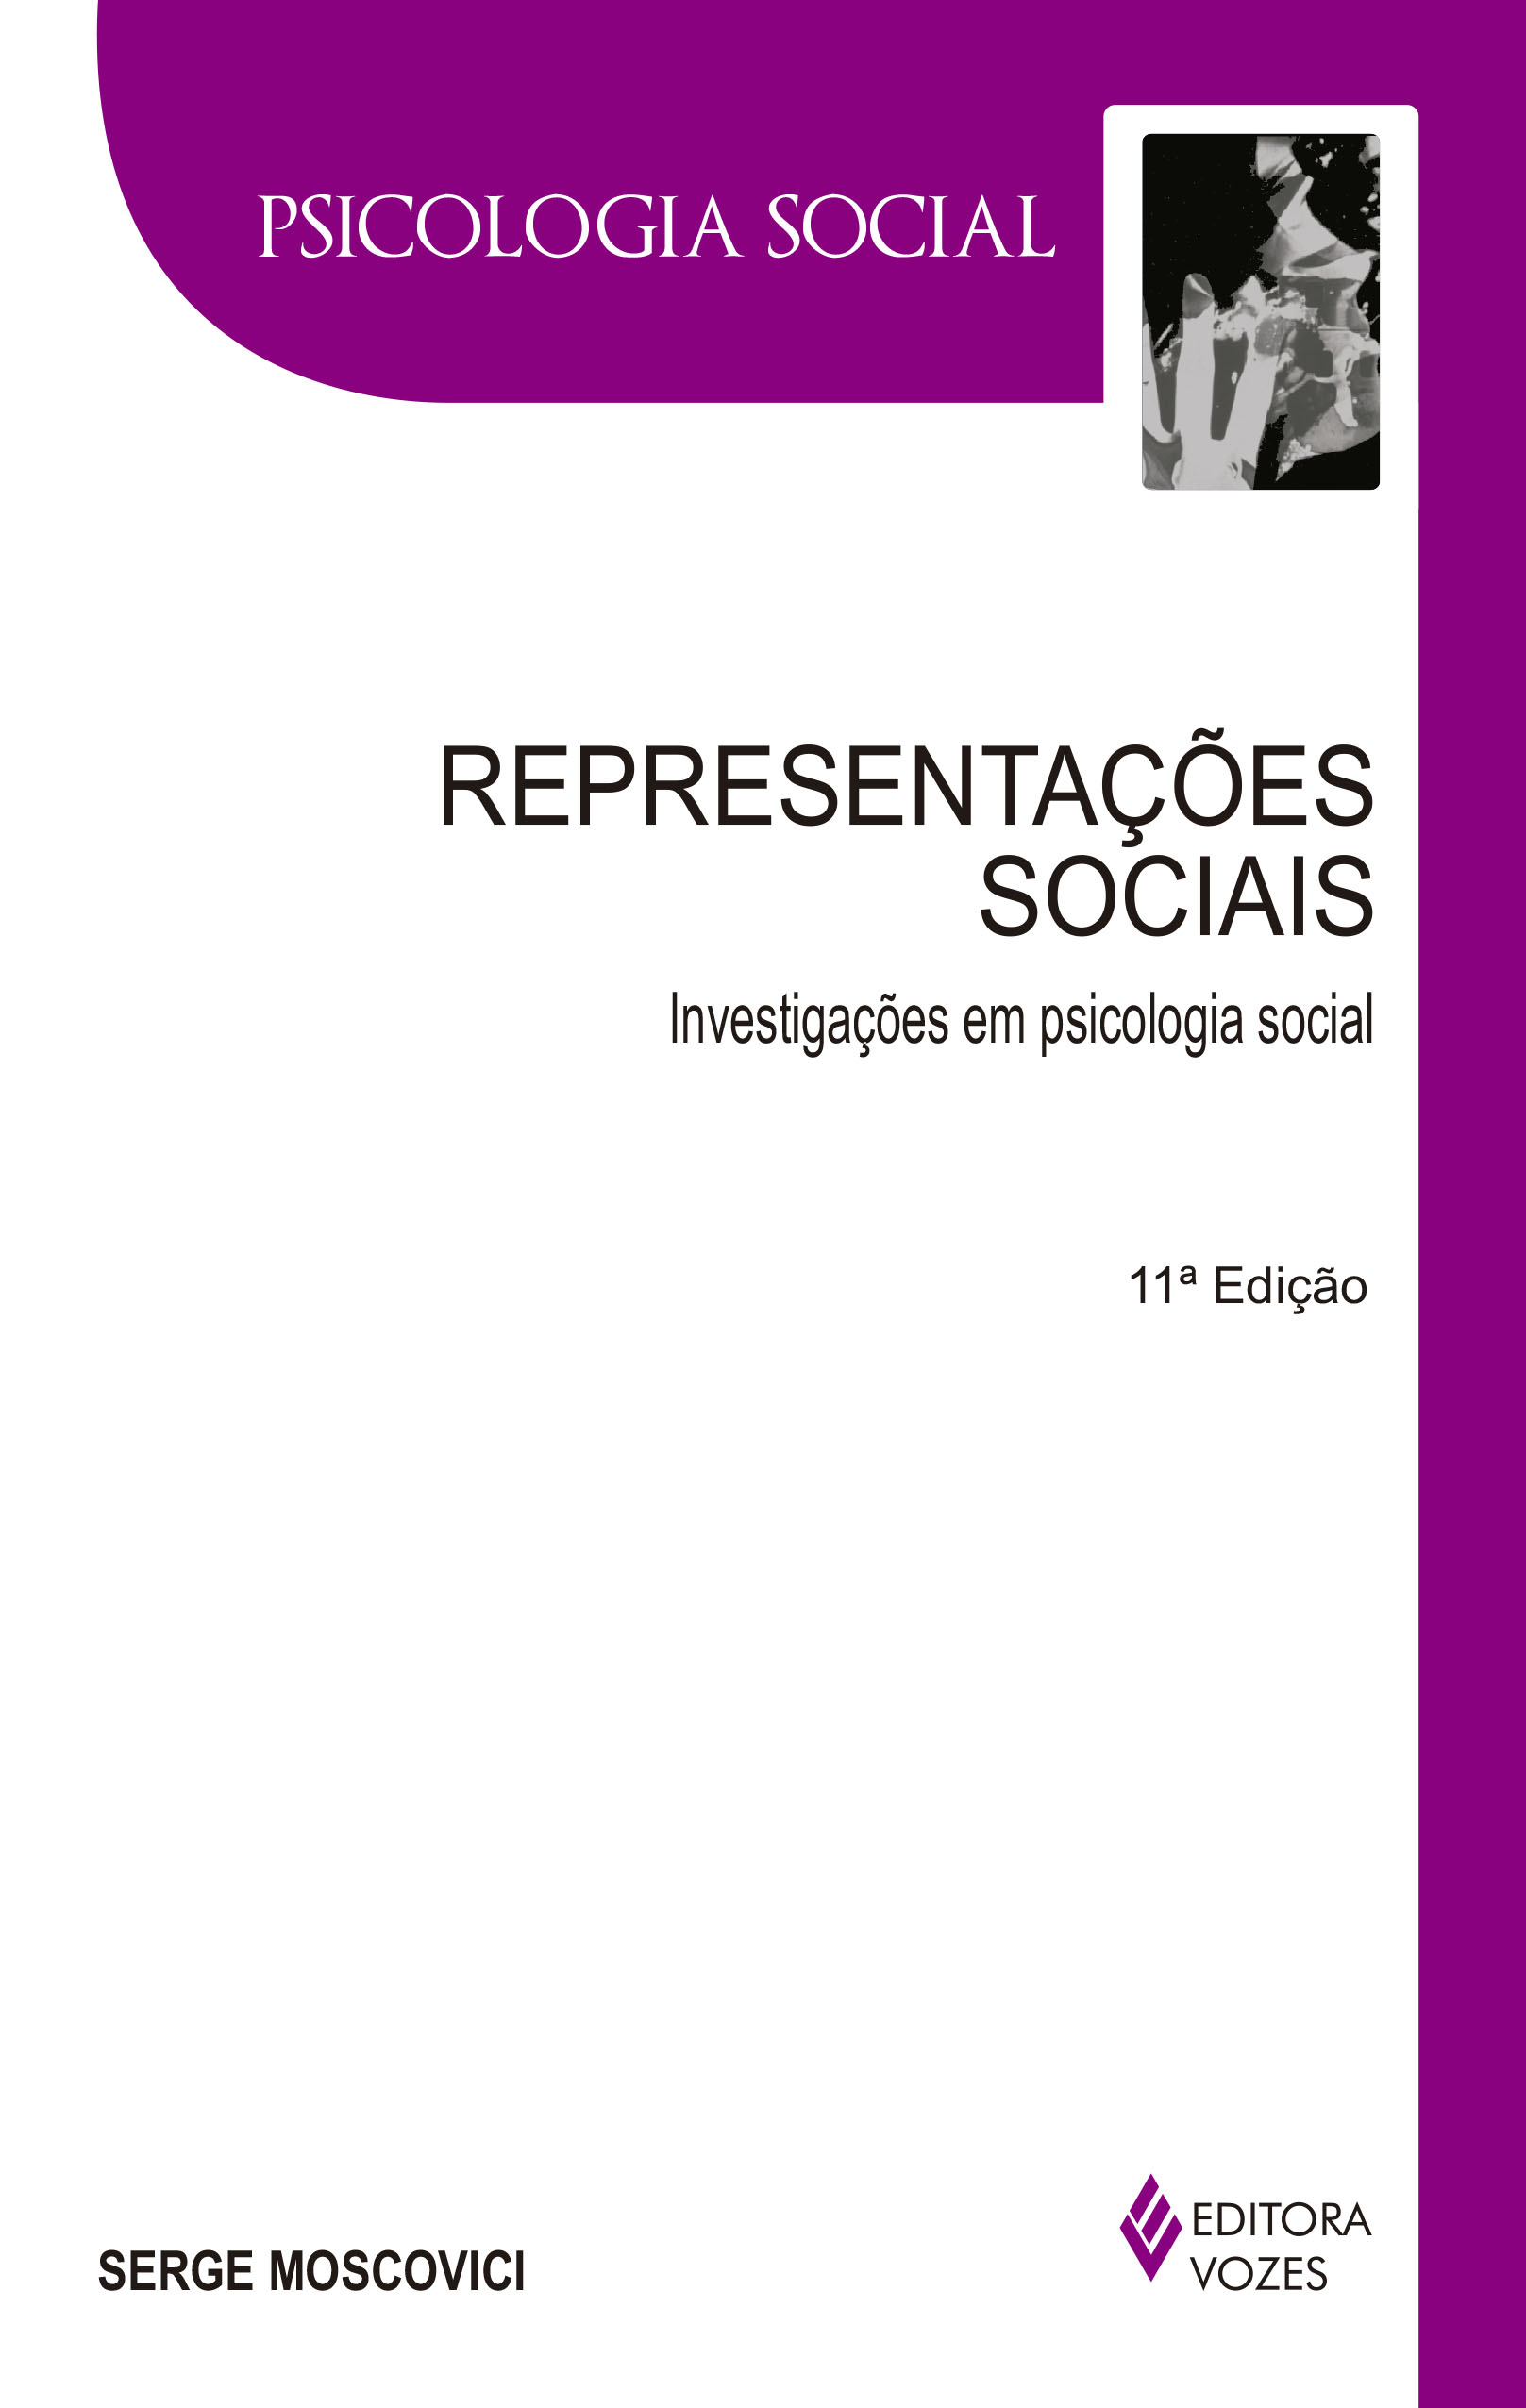 REPRESENTACOES SOCIAIS - INVESTIGACOES EM PSICOLOGIA SOCIAL